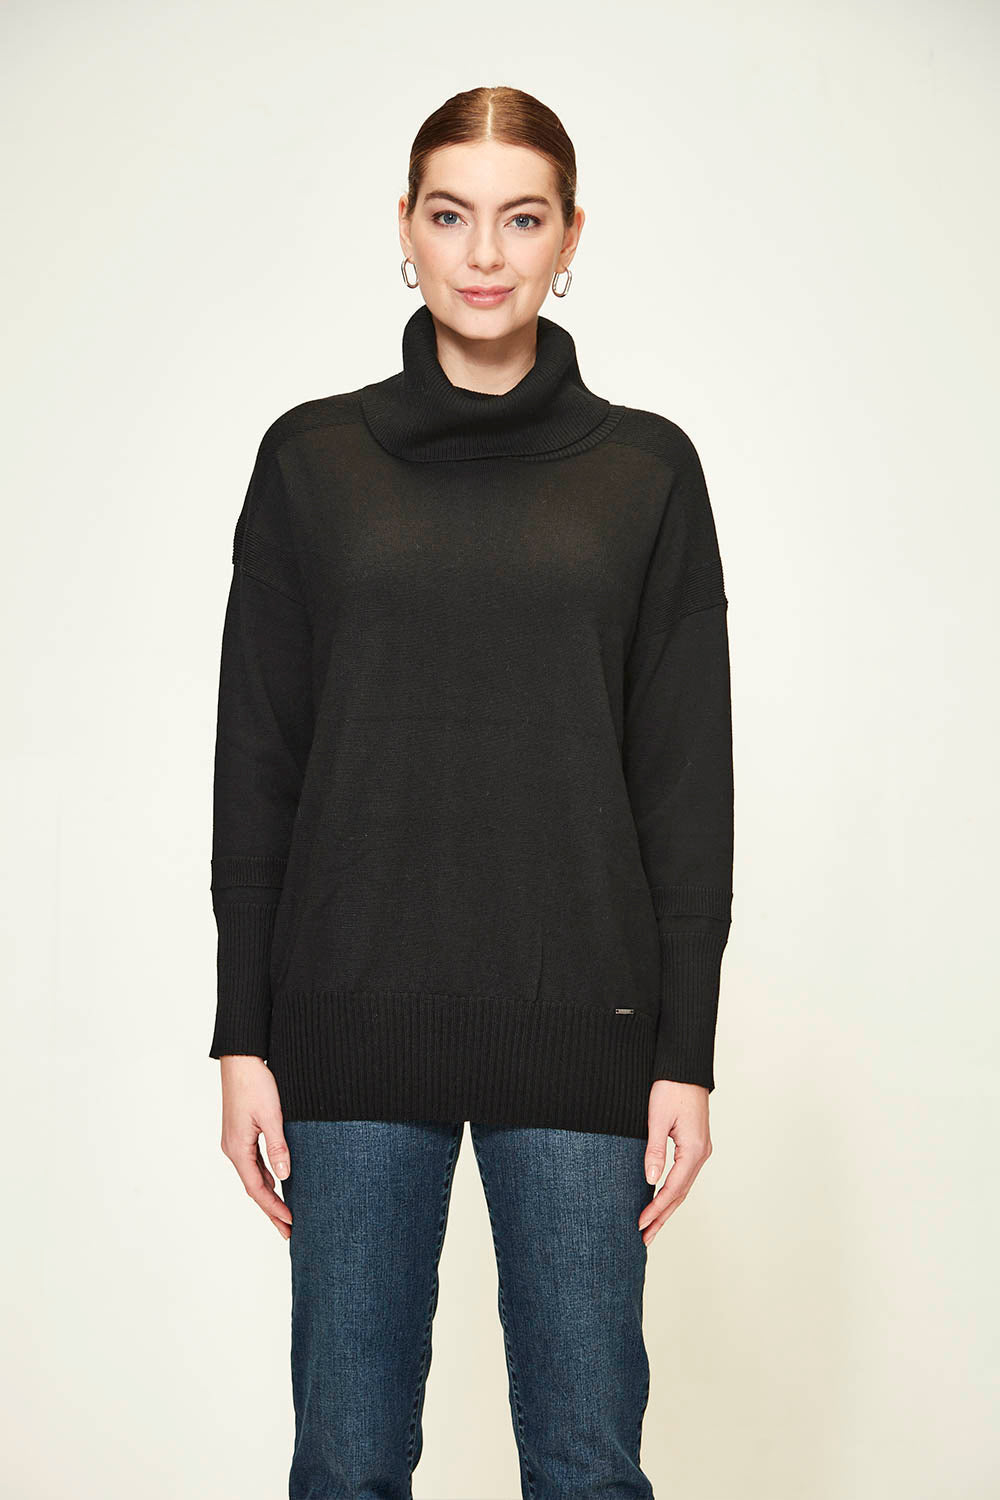 Remi Sweater Black